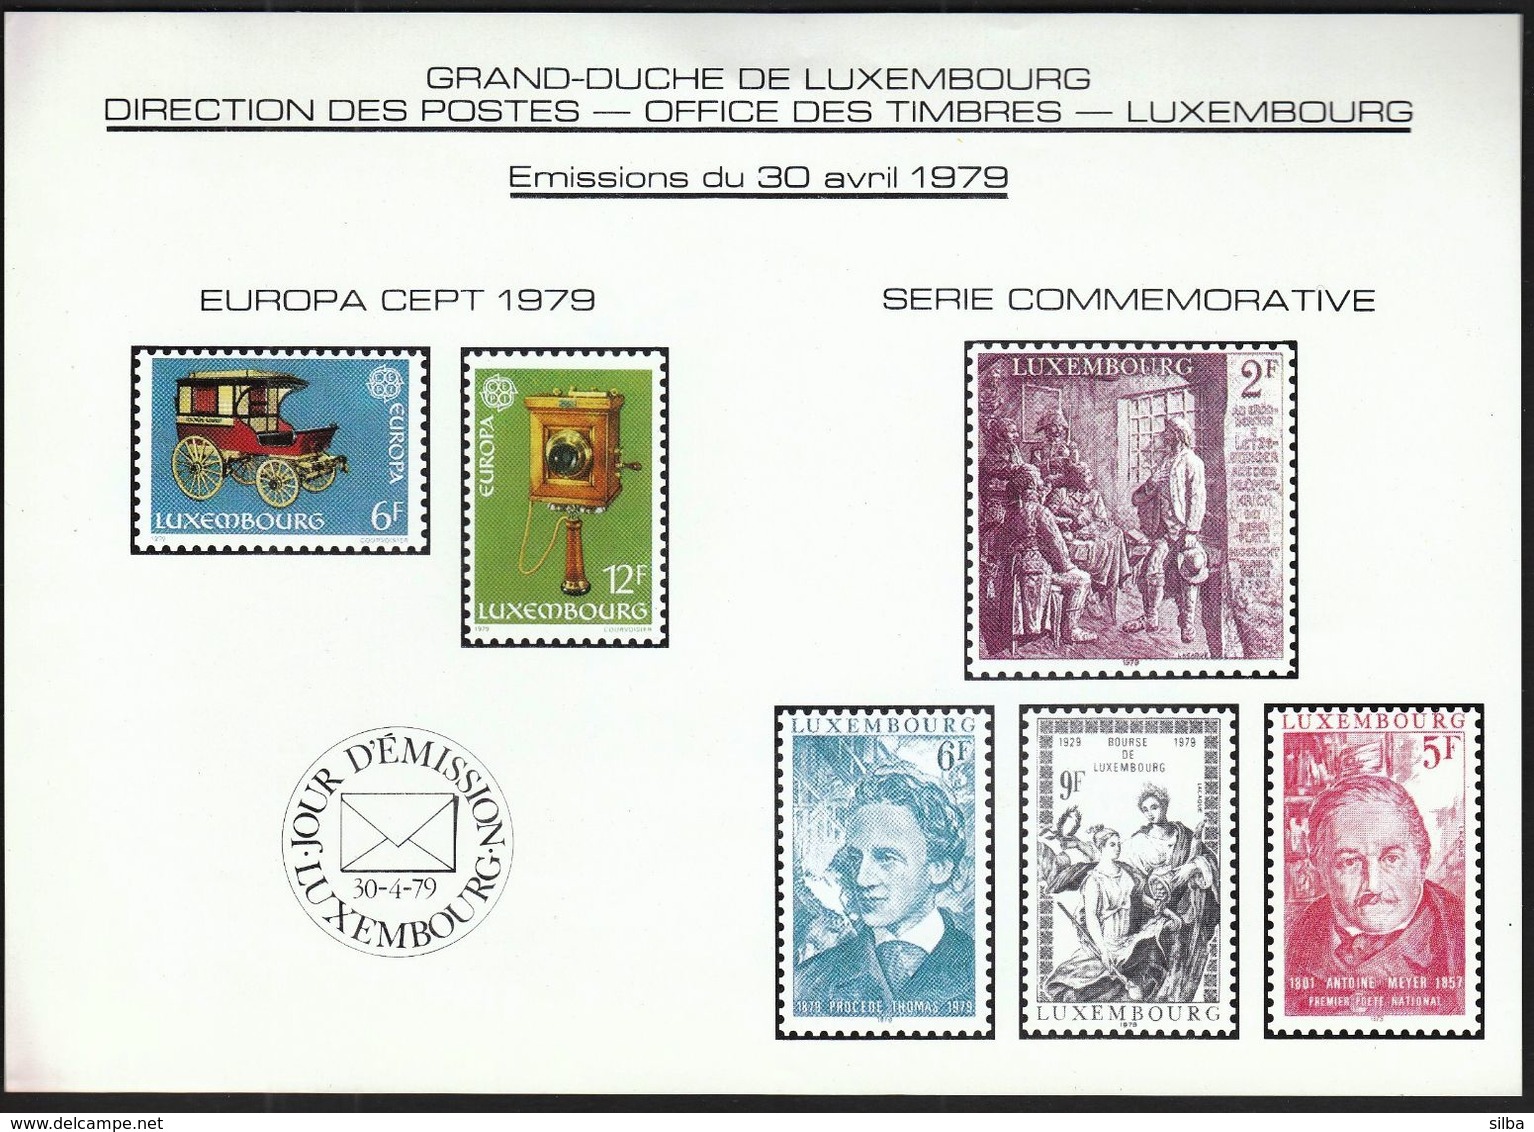 Luxembourg 1979 / Prospectus, Leaflet, Brochure / Europa CEPT - 1979